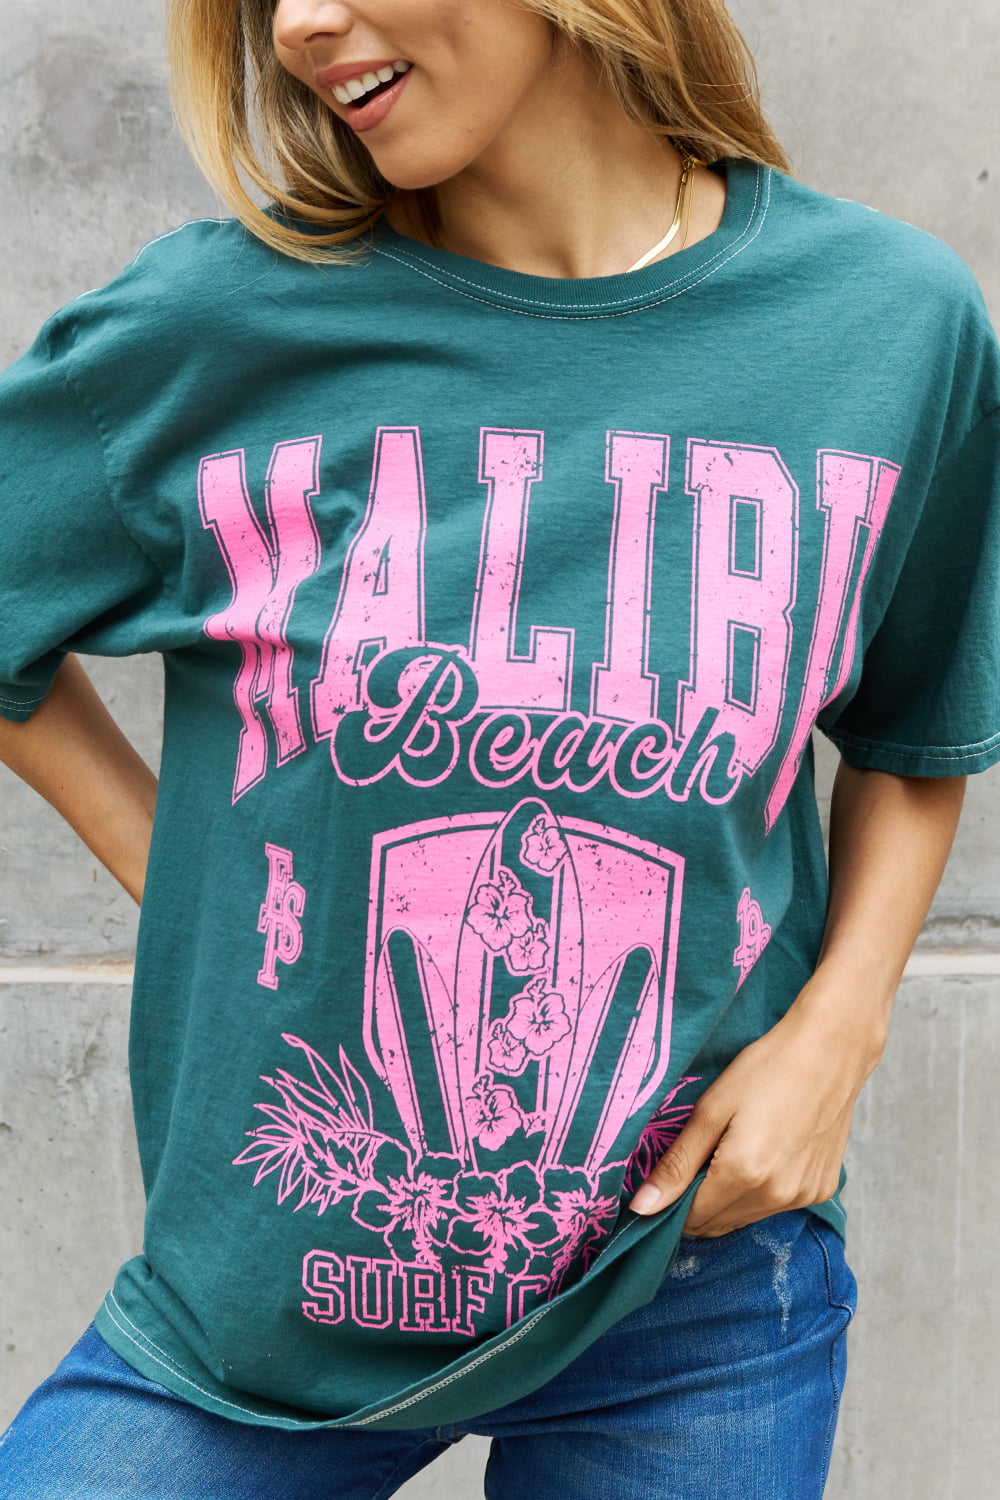 Sweet Claire "Malibu Surf Club" Graphic T-Shirt